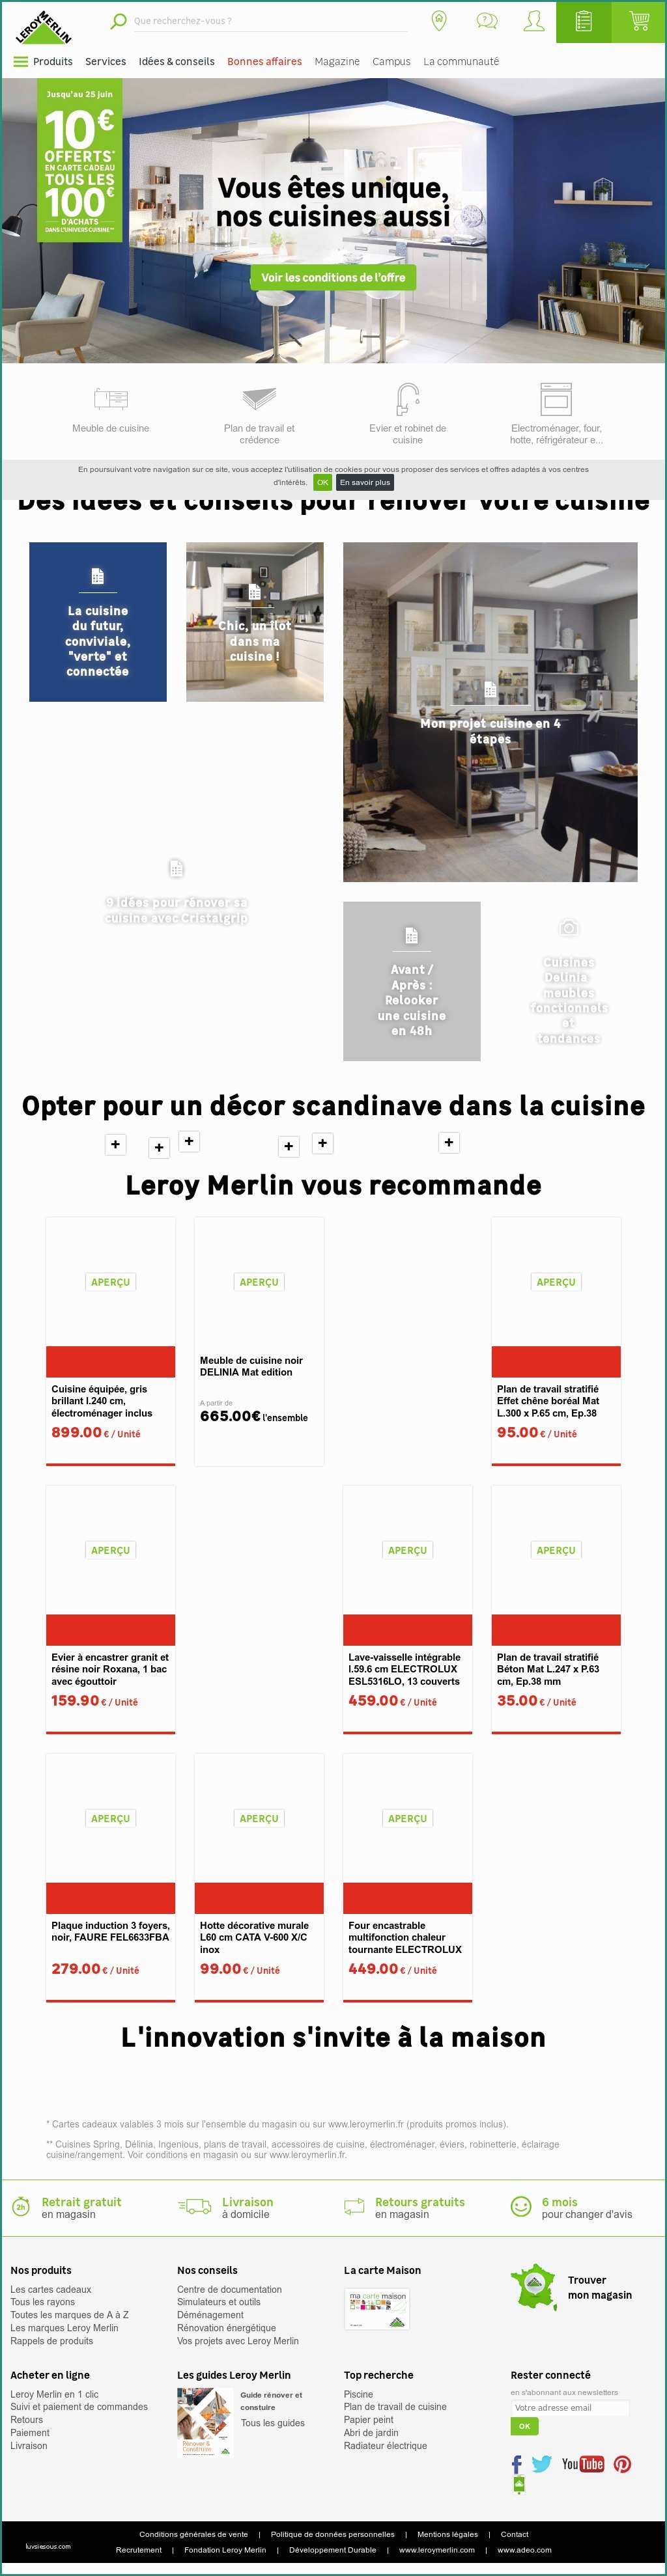 Barbecue Leroy Merlin In Muratura E Cuisine Spring Leroy Merlin Cool Cuisine Spring Leroy Merlin Great